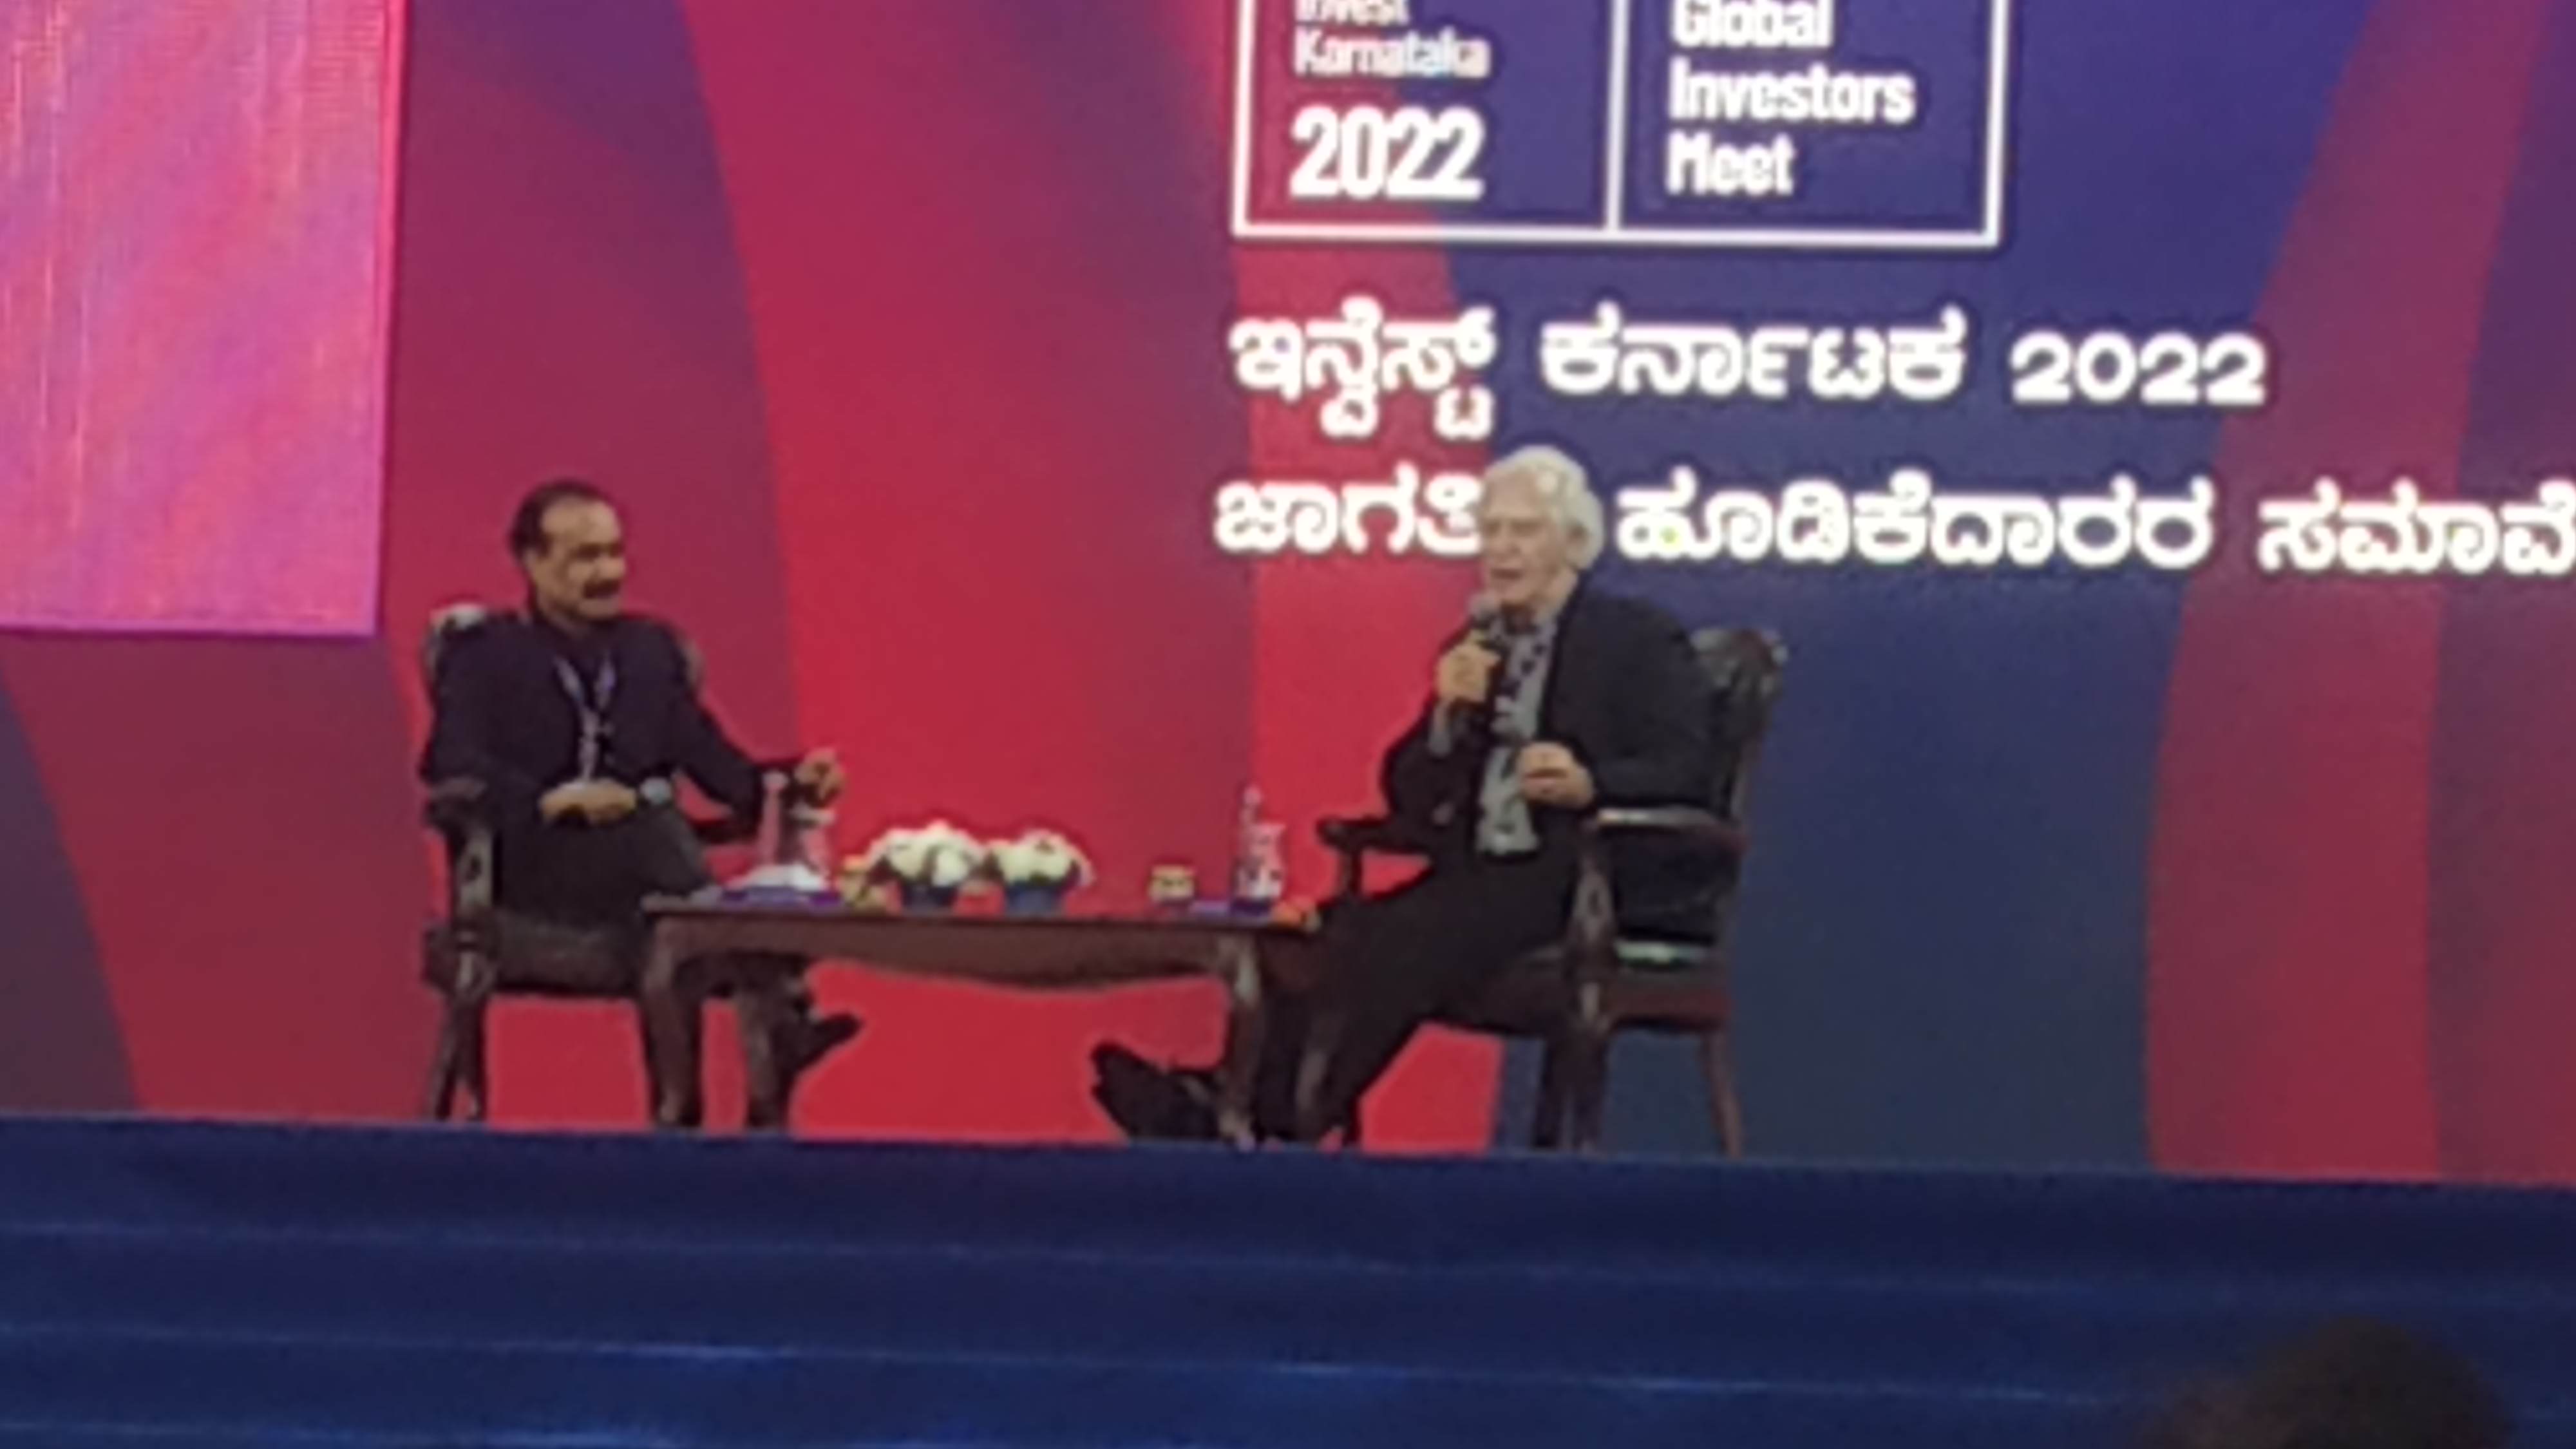 Jev Siegel speaks about karnataka